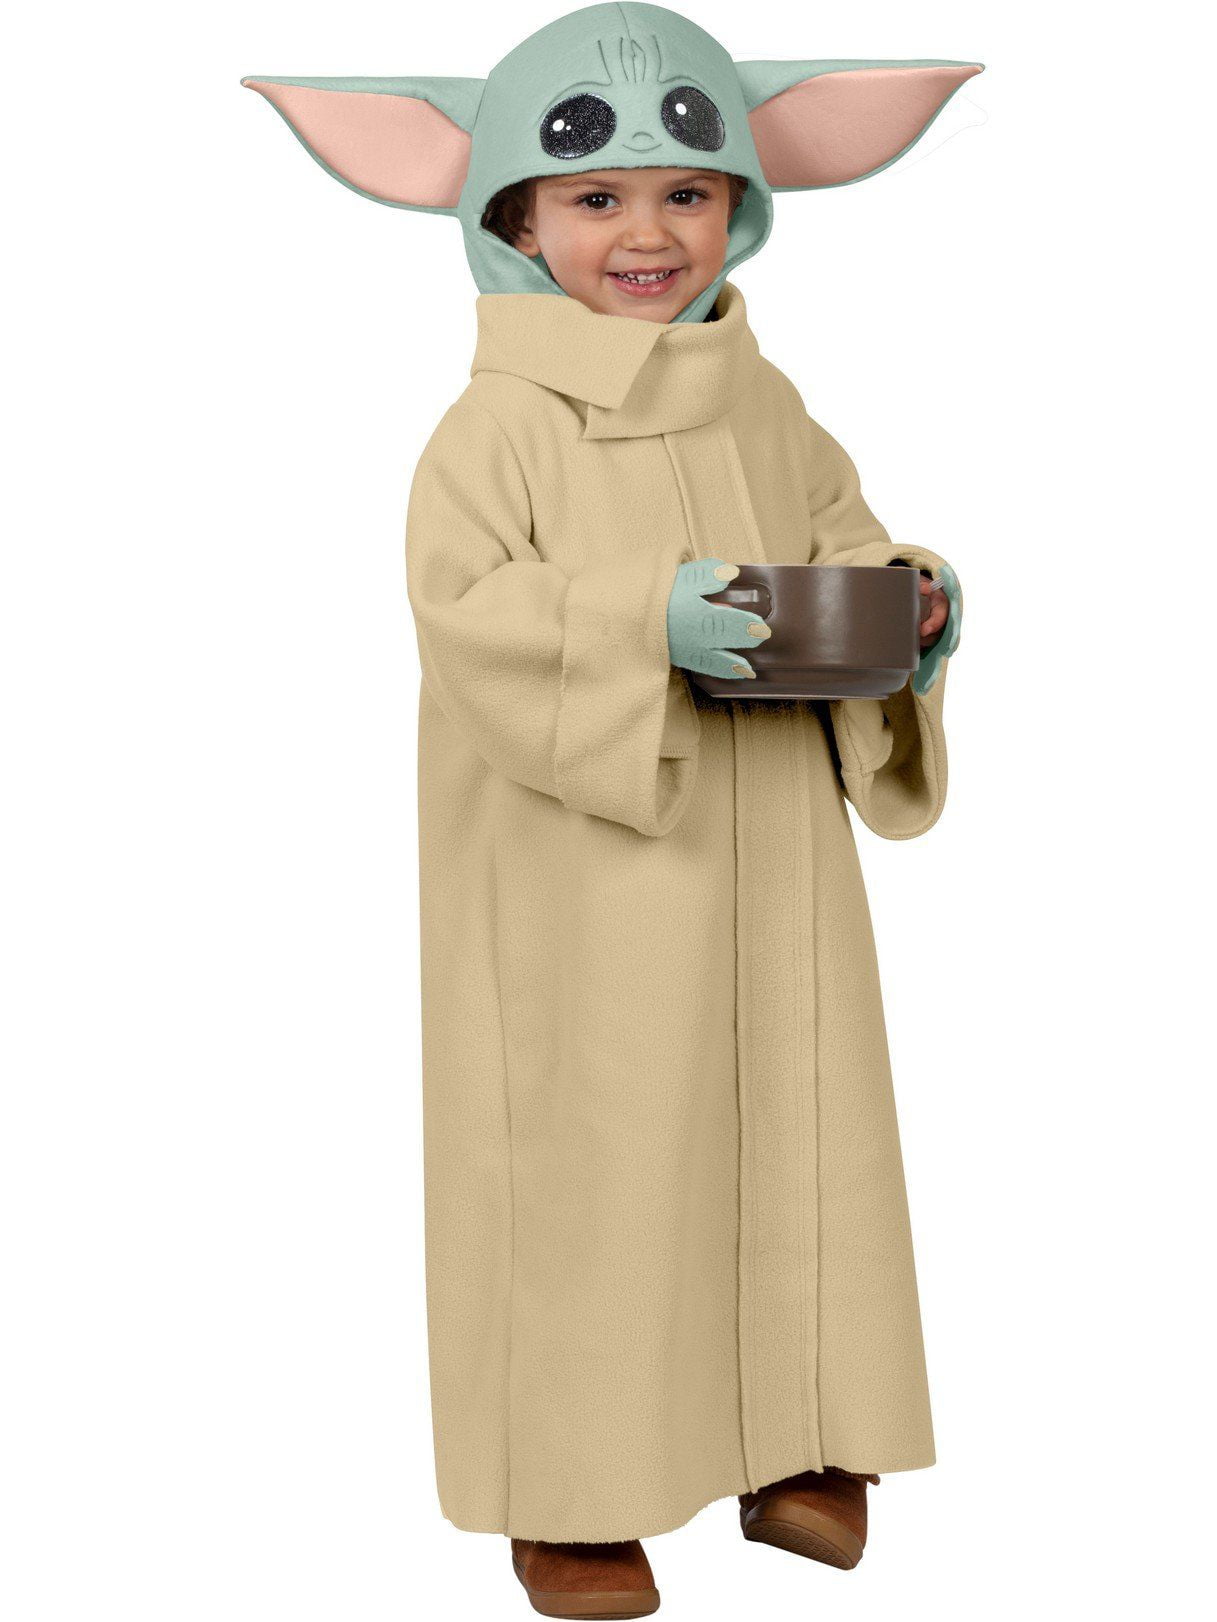 The Mandalorian Star Wars Boy's Halloween Fancy-Dress Costume for Child, Toddler 3T-4T